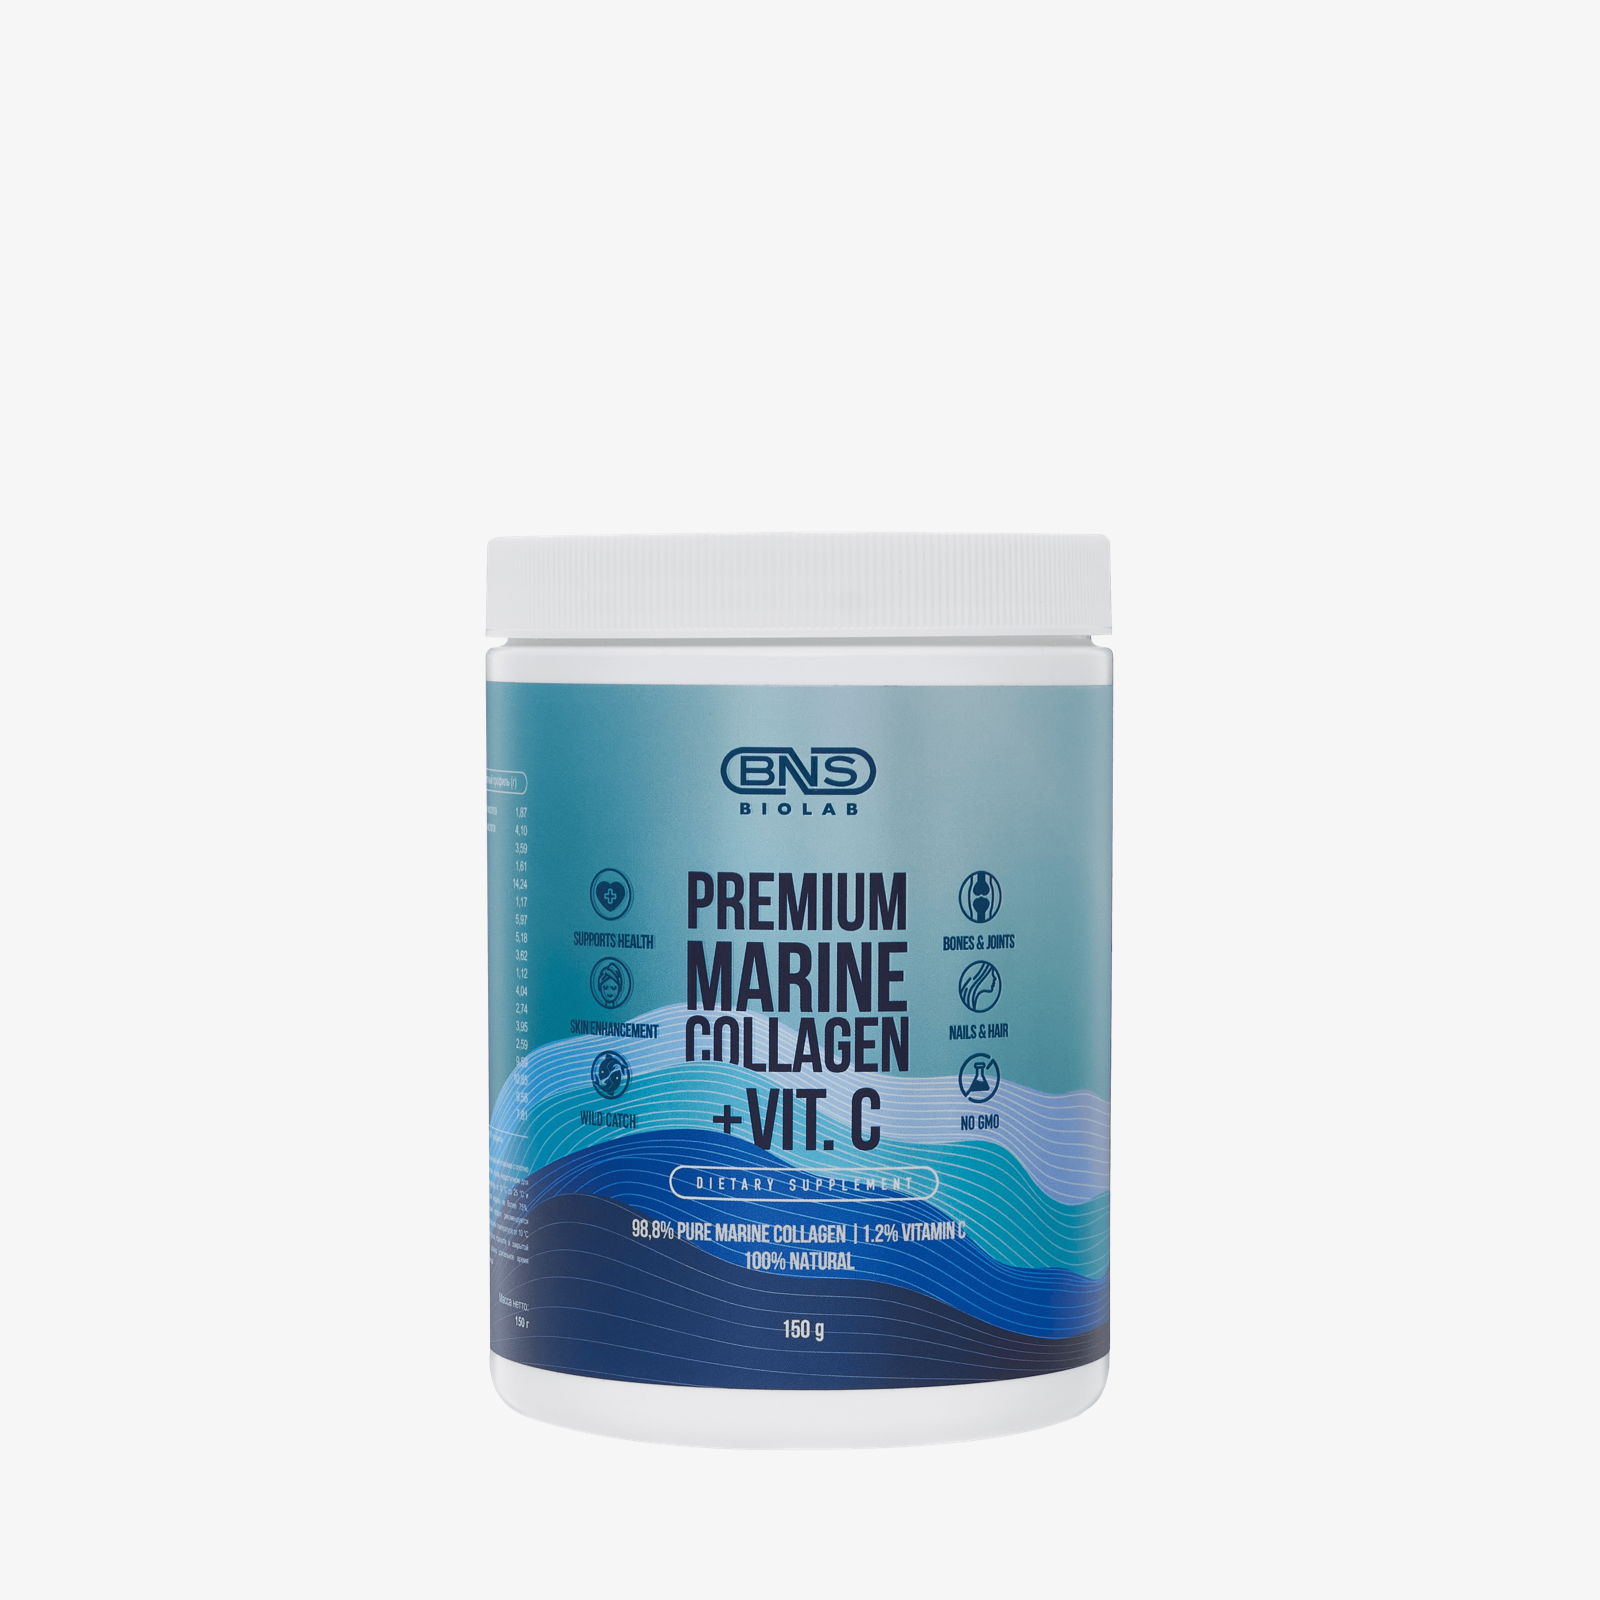 Marine collagen c. БИОЛАБ премиум Марине коллаген. BNS Biolab Premium Marine Collagen+Vit.c. Морской коллаген. Jan Marini коллаген.